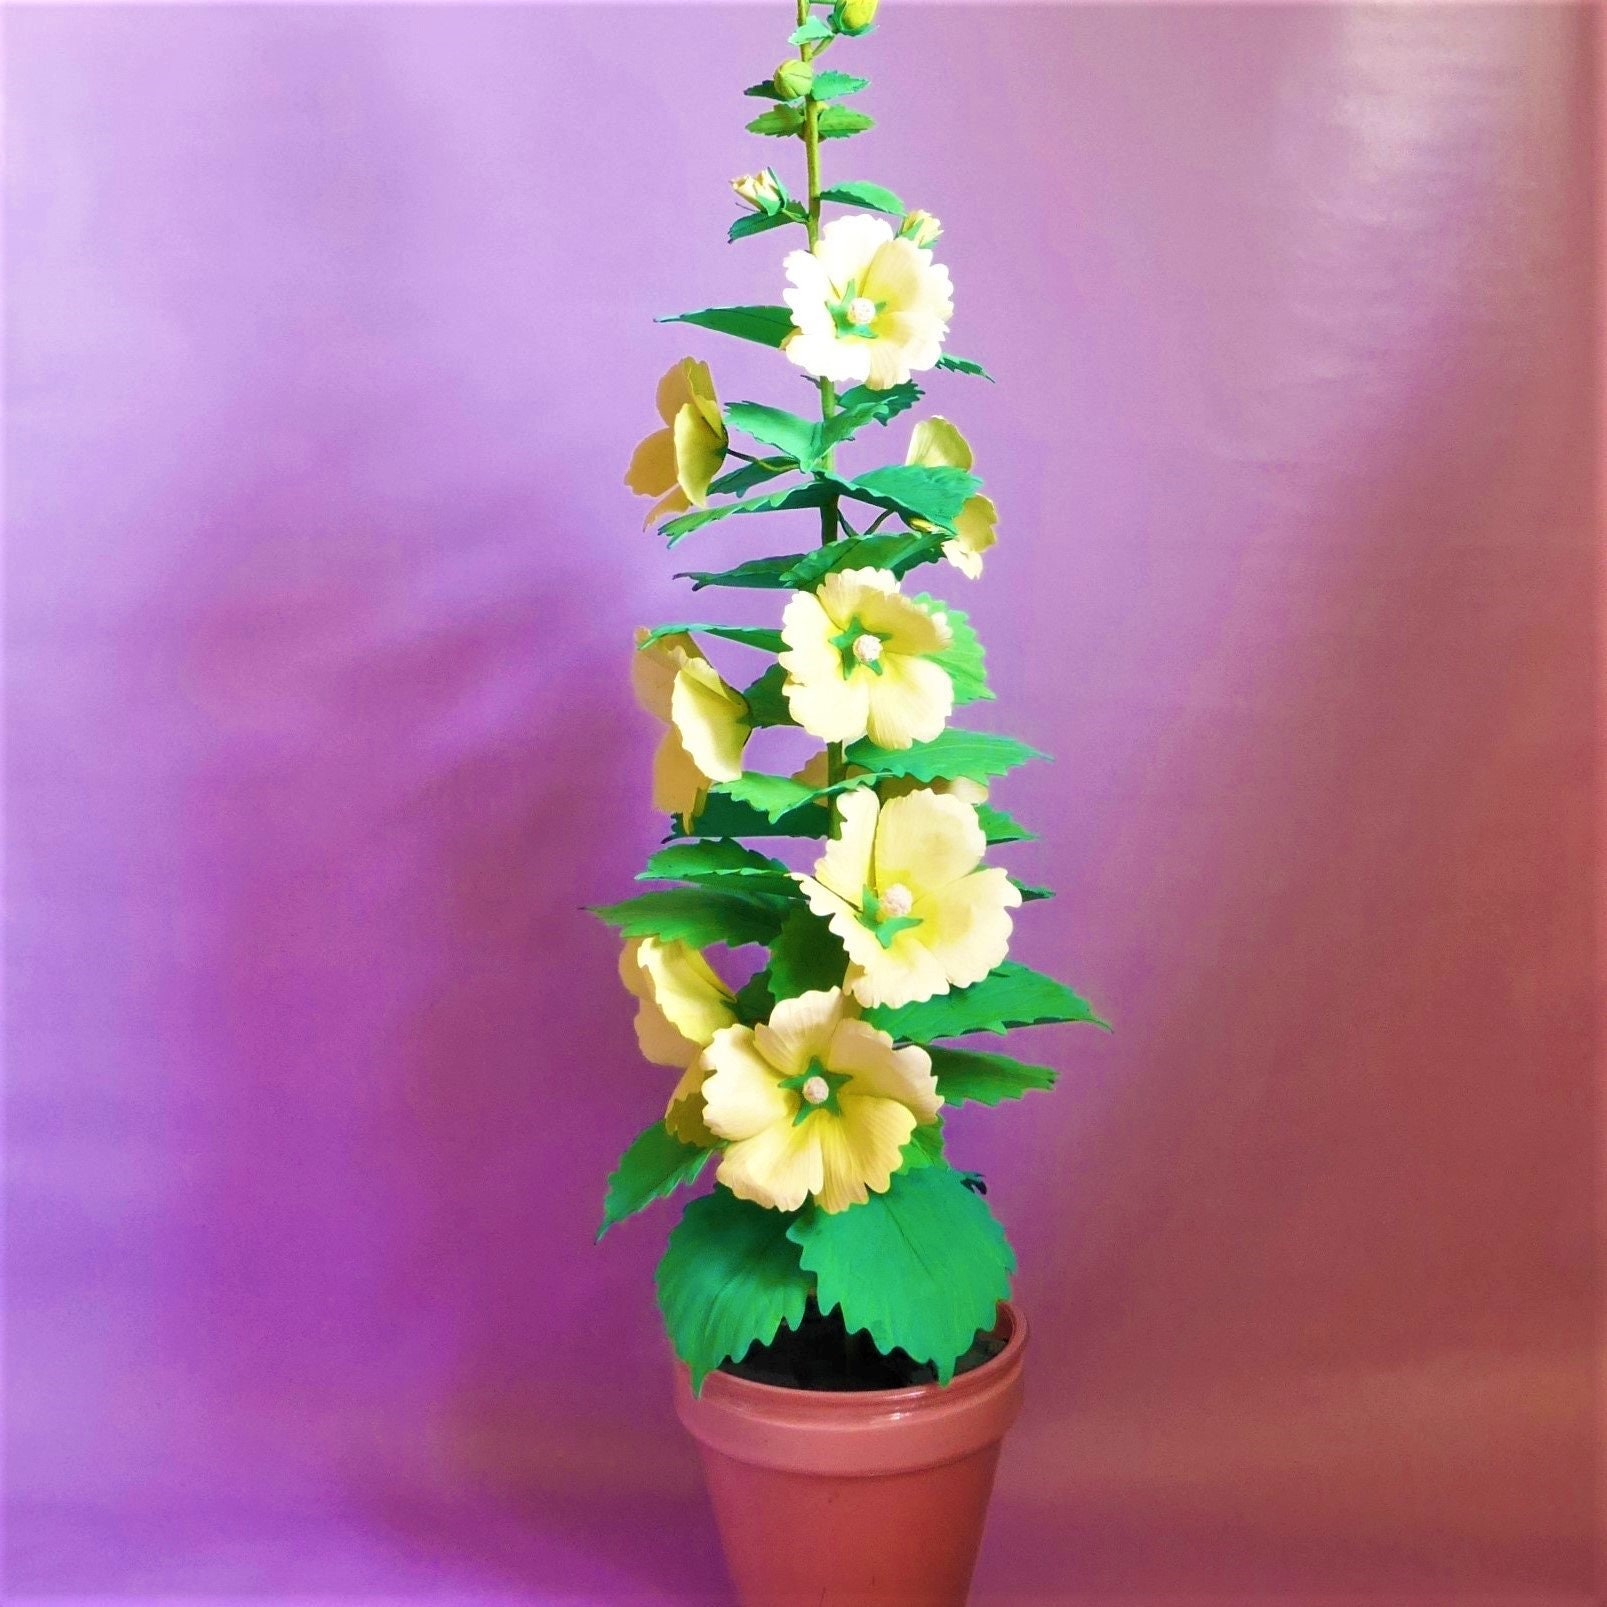 Flower Explosion Box Paper Flower 3D Card Templates Video Tutorial Instant  Download SVG Silhouette Scan&cut 3D DIY 